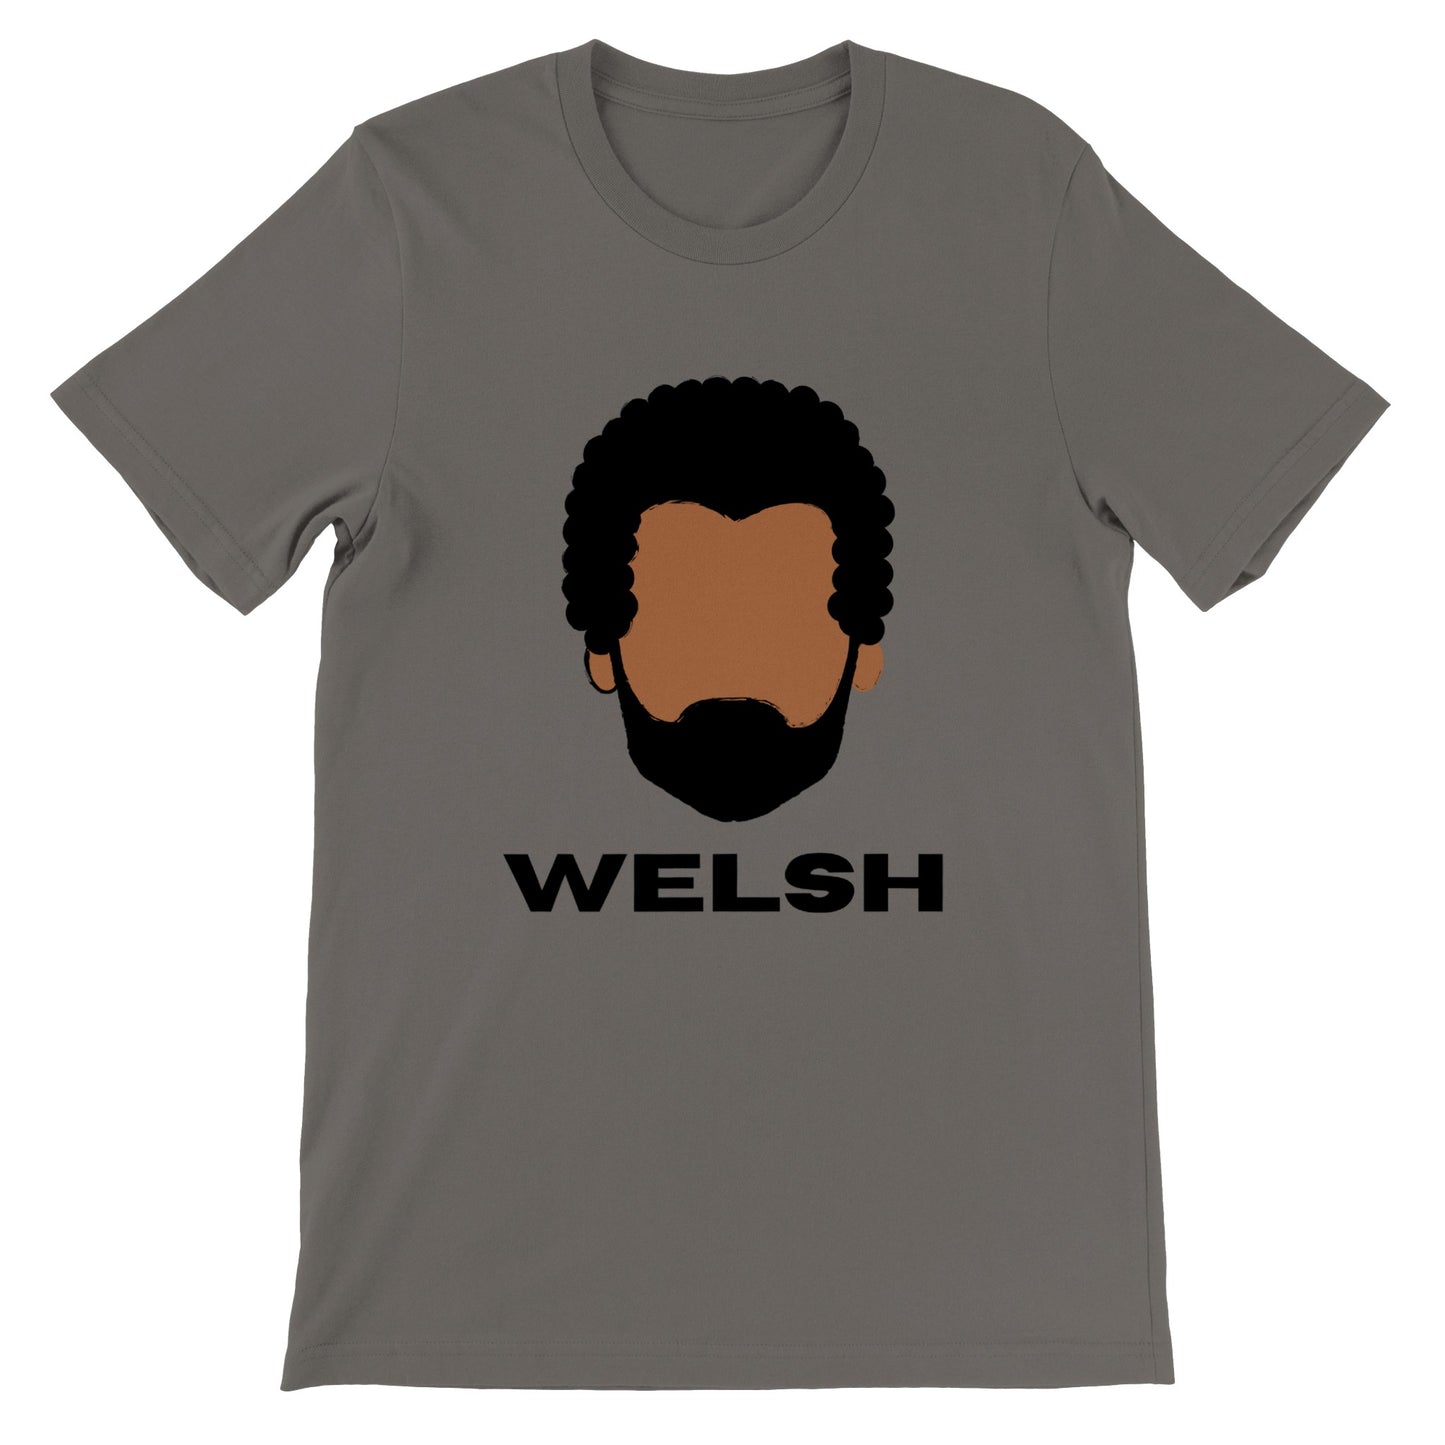 Welsh - Premium Unisex Crewneck T-shirt